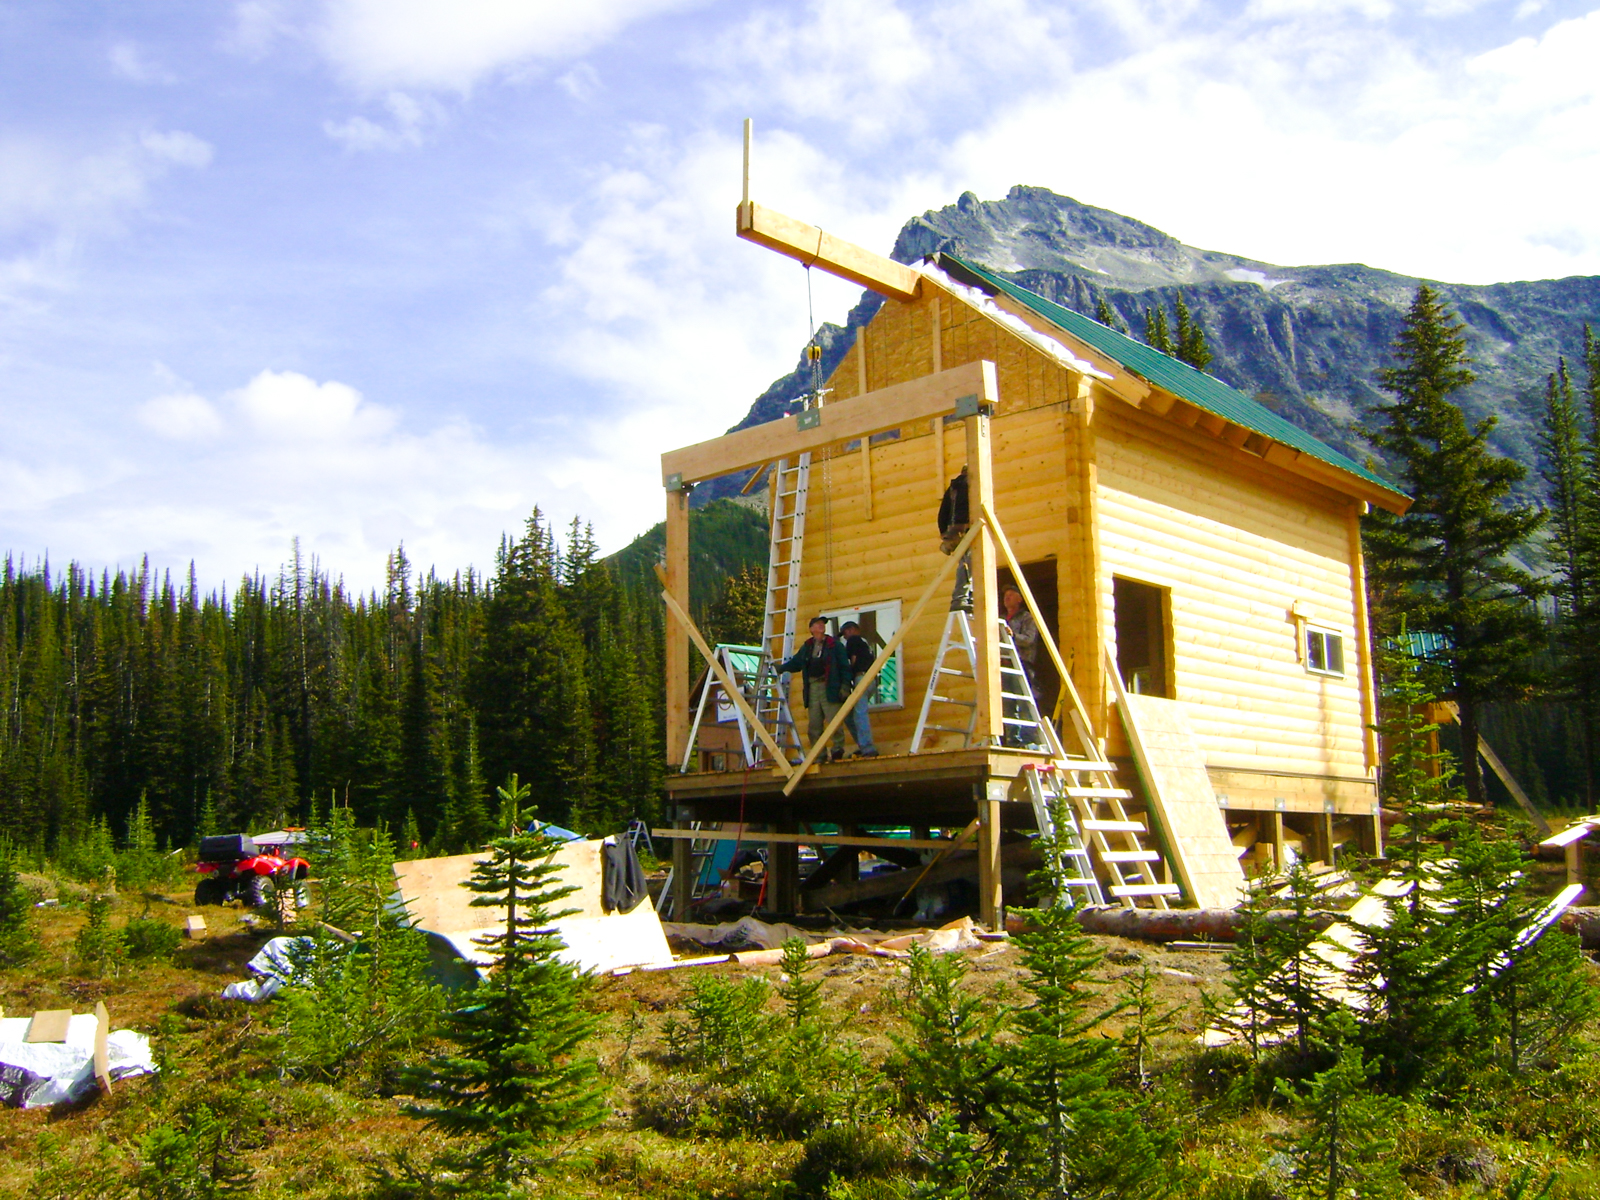 Our Origin Story: How we built Mallard Mountain Lodge